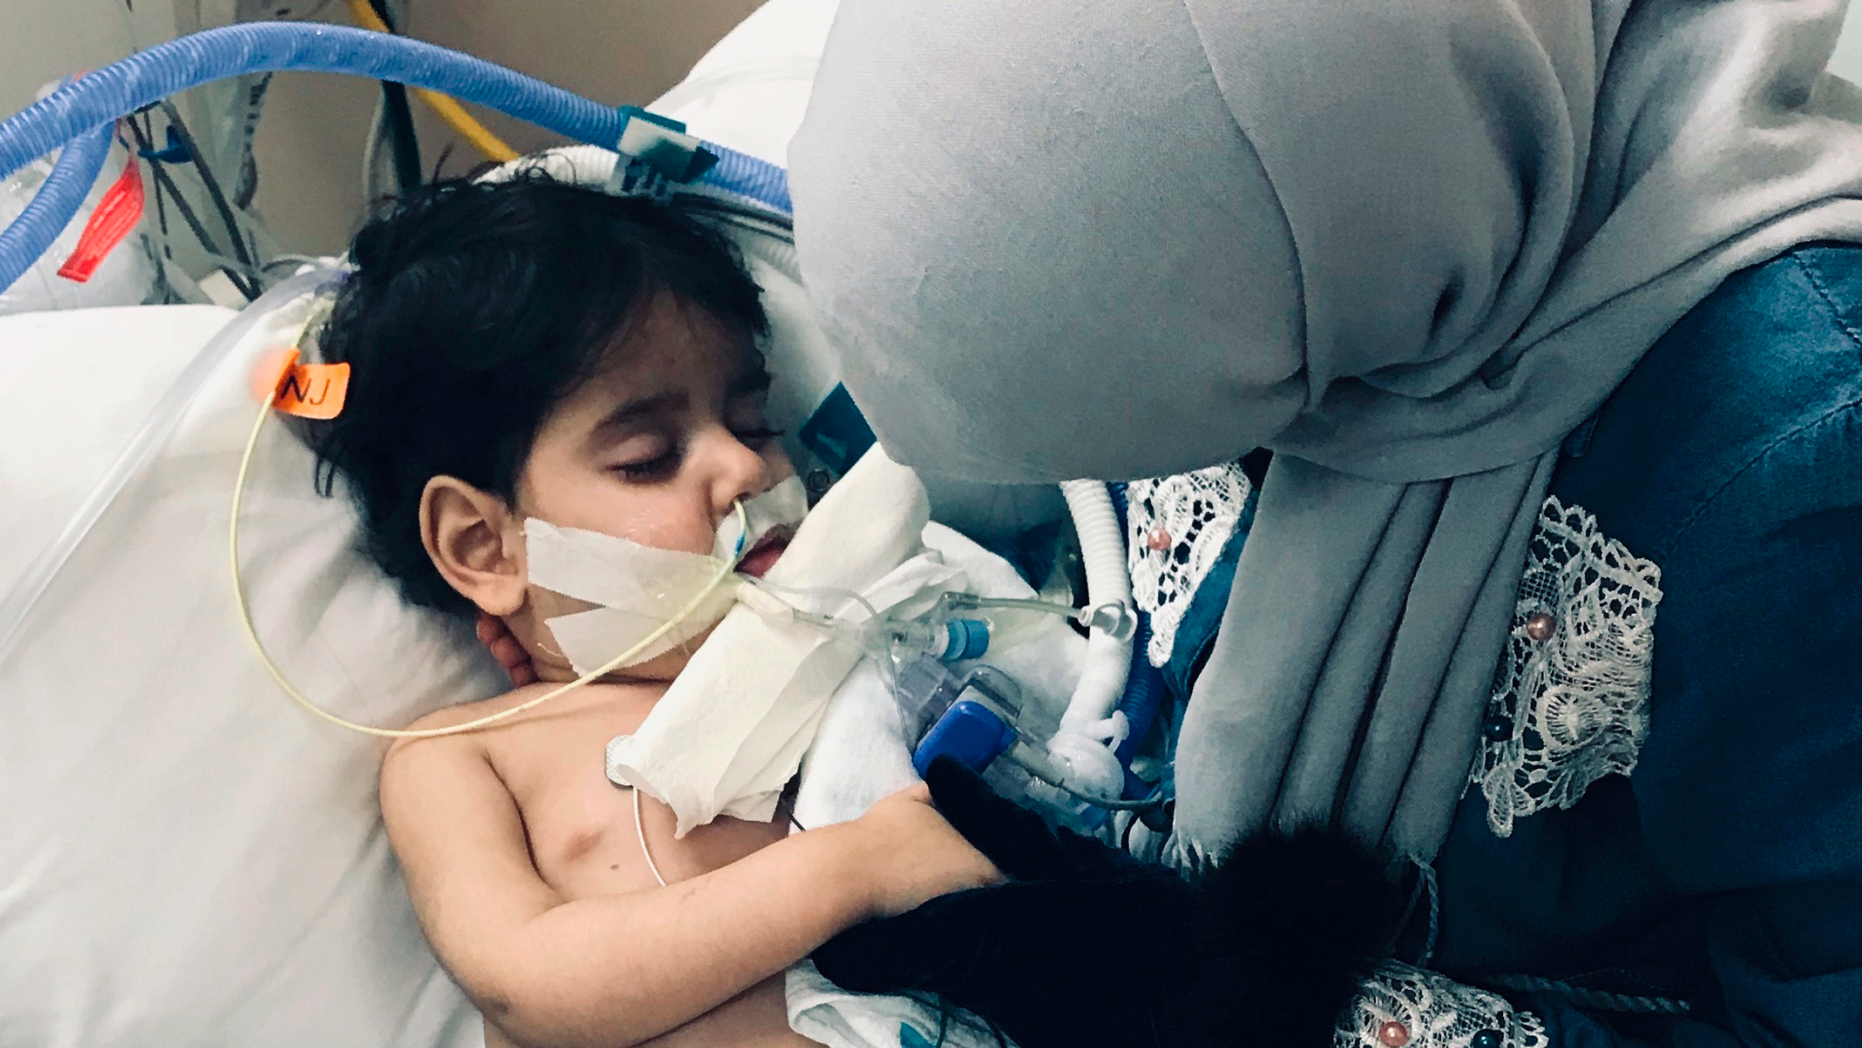 Boy whose Yemeni mom fought US travel ban to see him dies